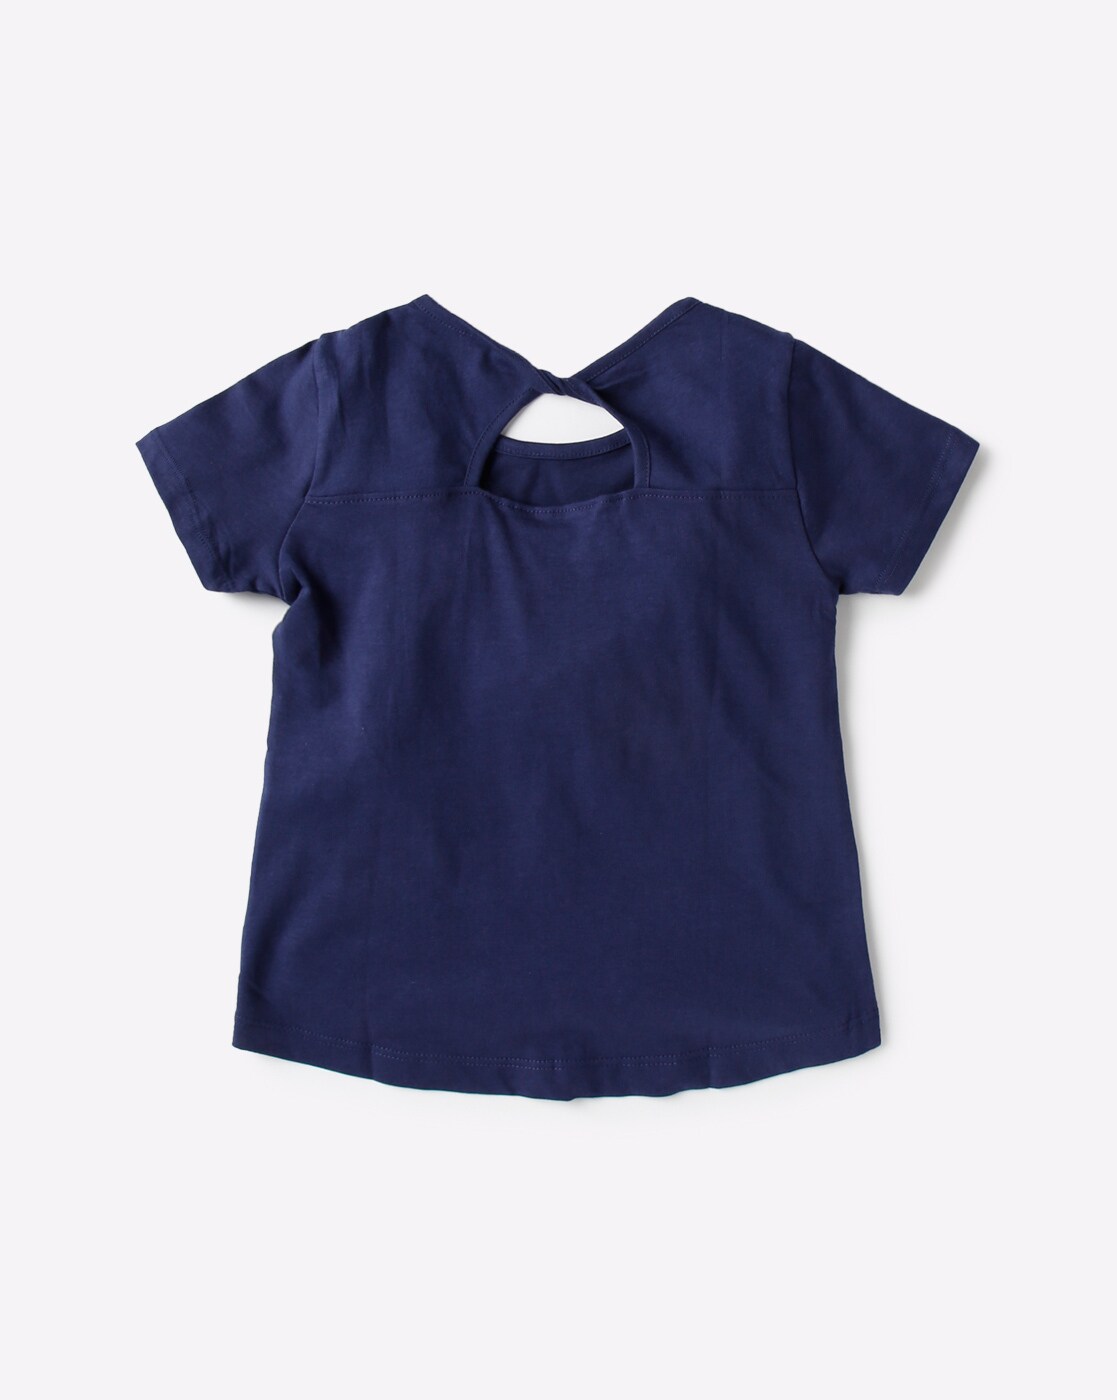 Buy Navy Blue Tshirts for Girls by KG FRENDZ Online